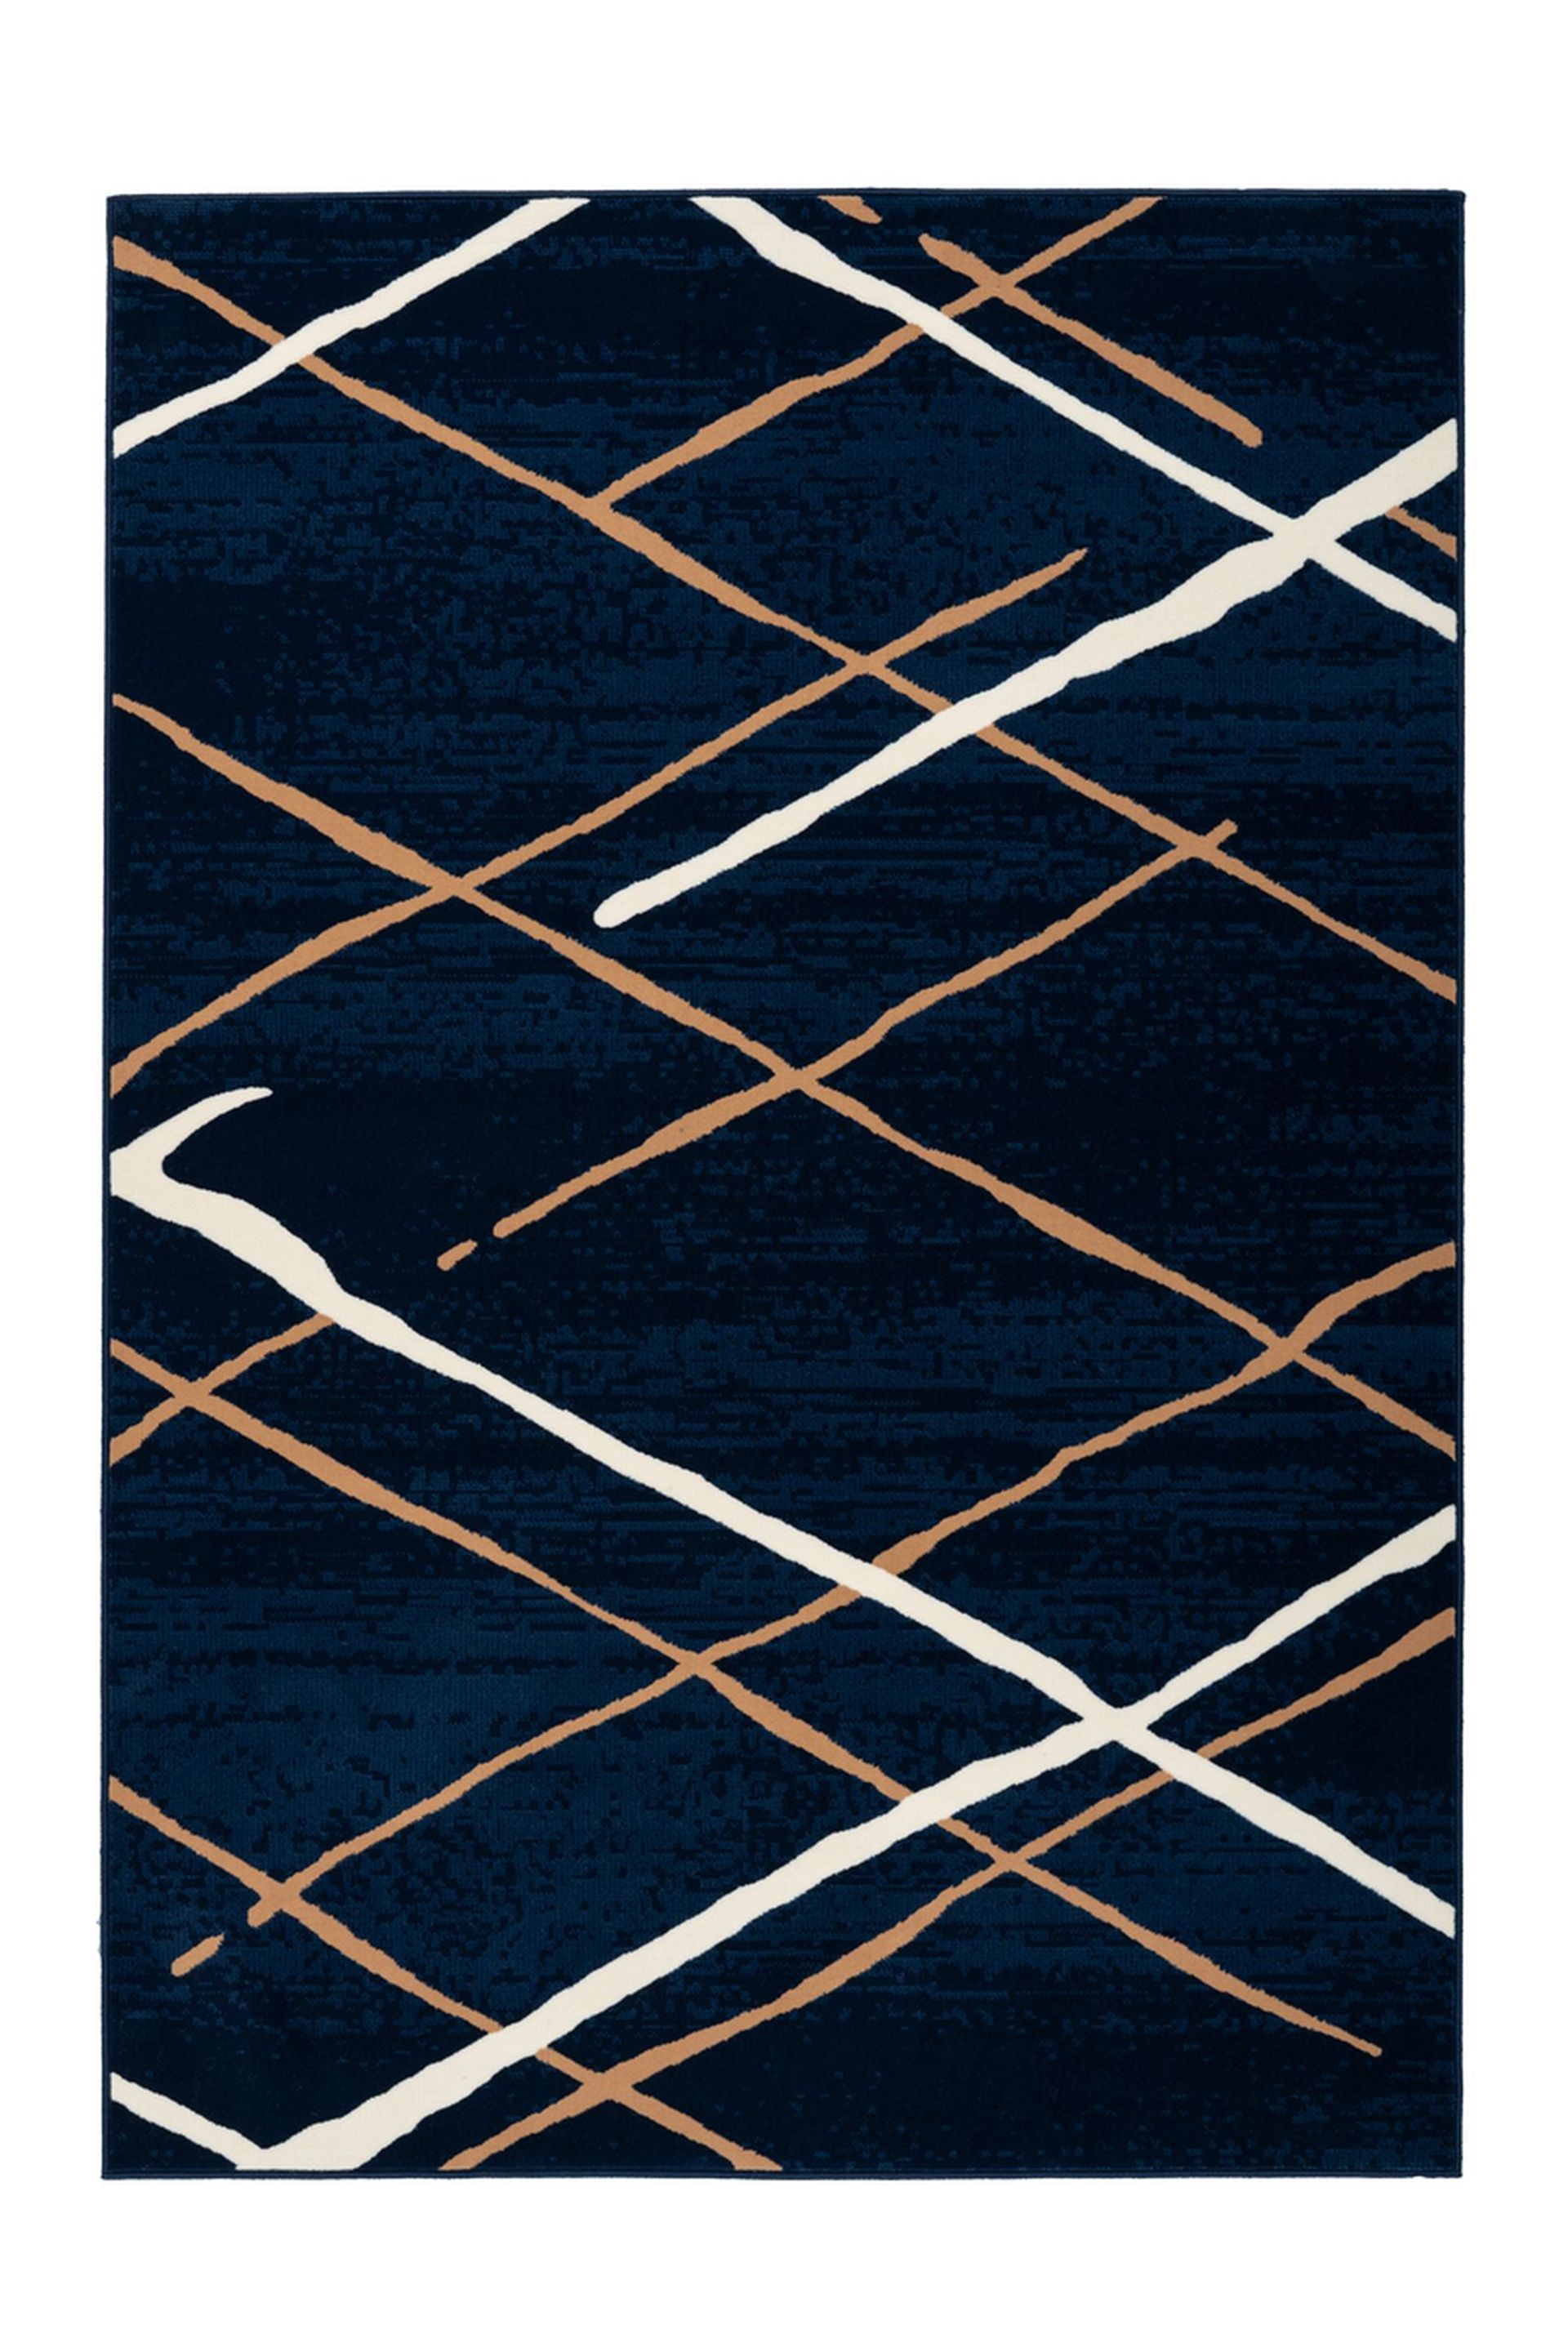 Teppich Vancouver 110 Blau / Beige / Weiß 120cm x 170cm